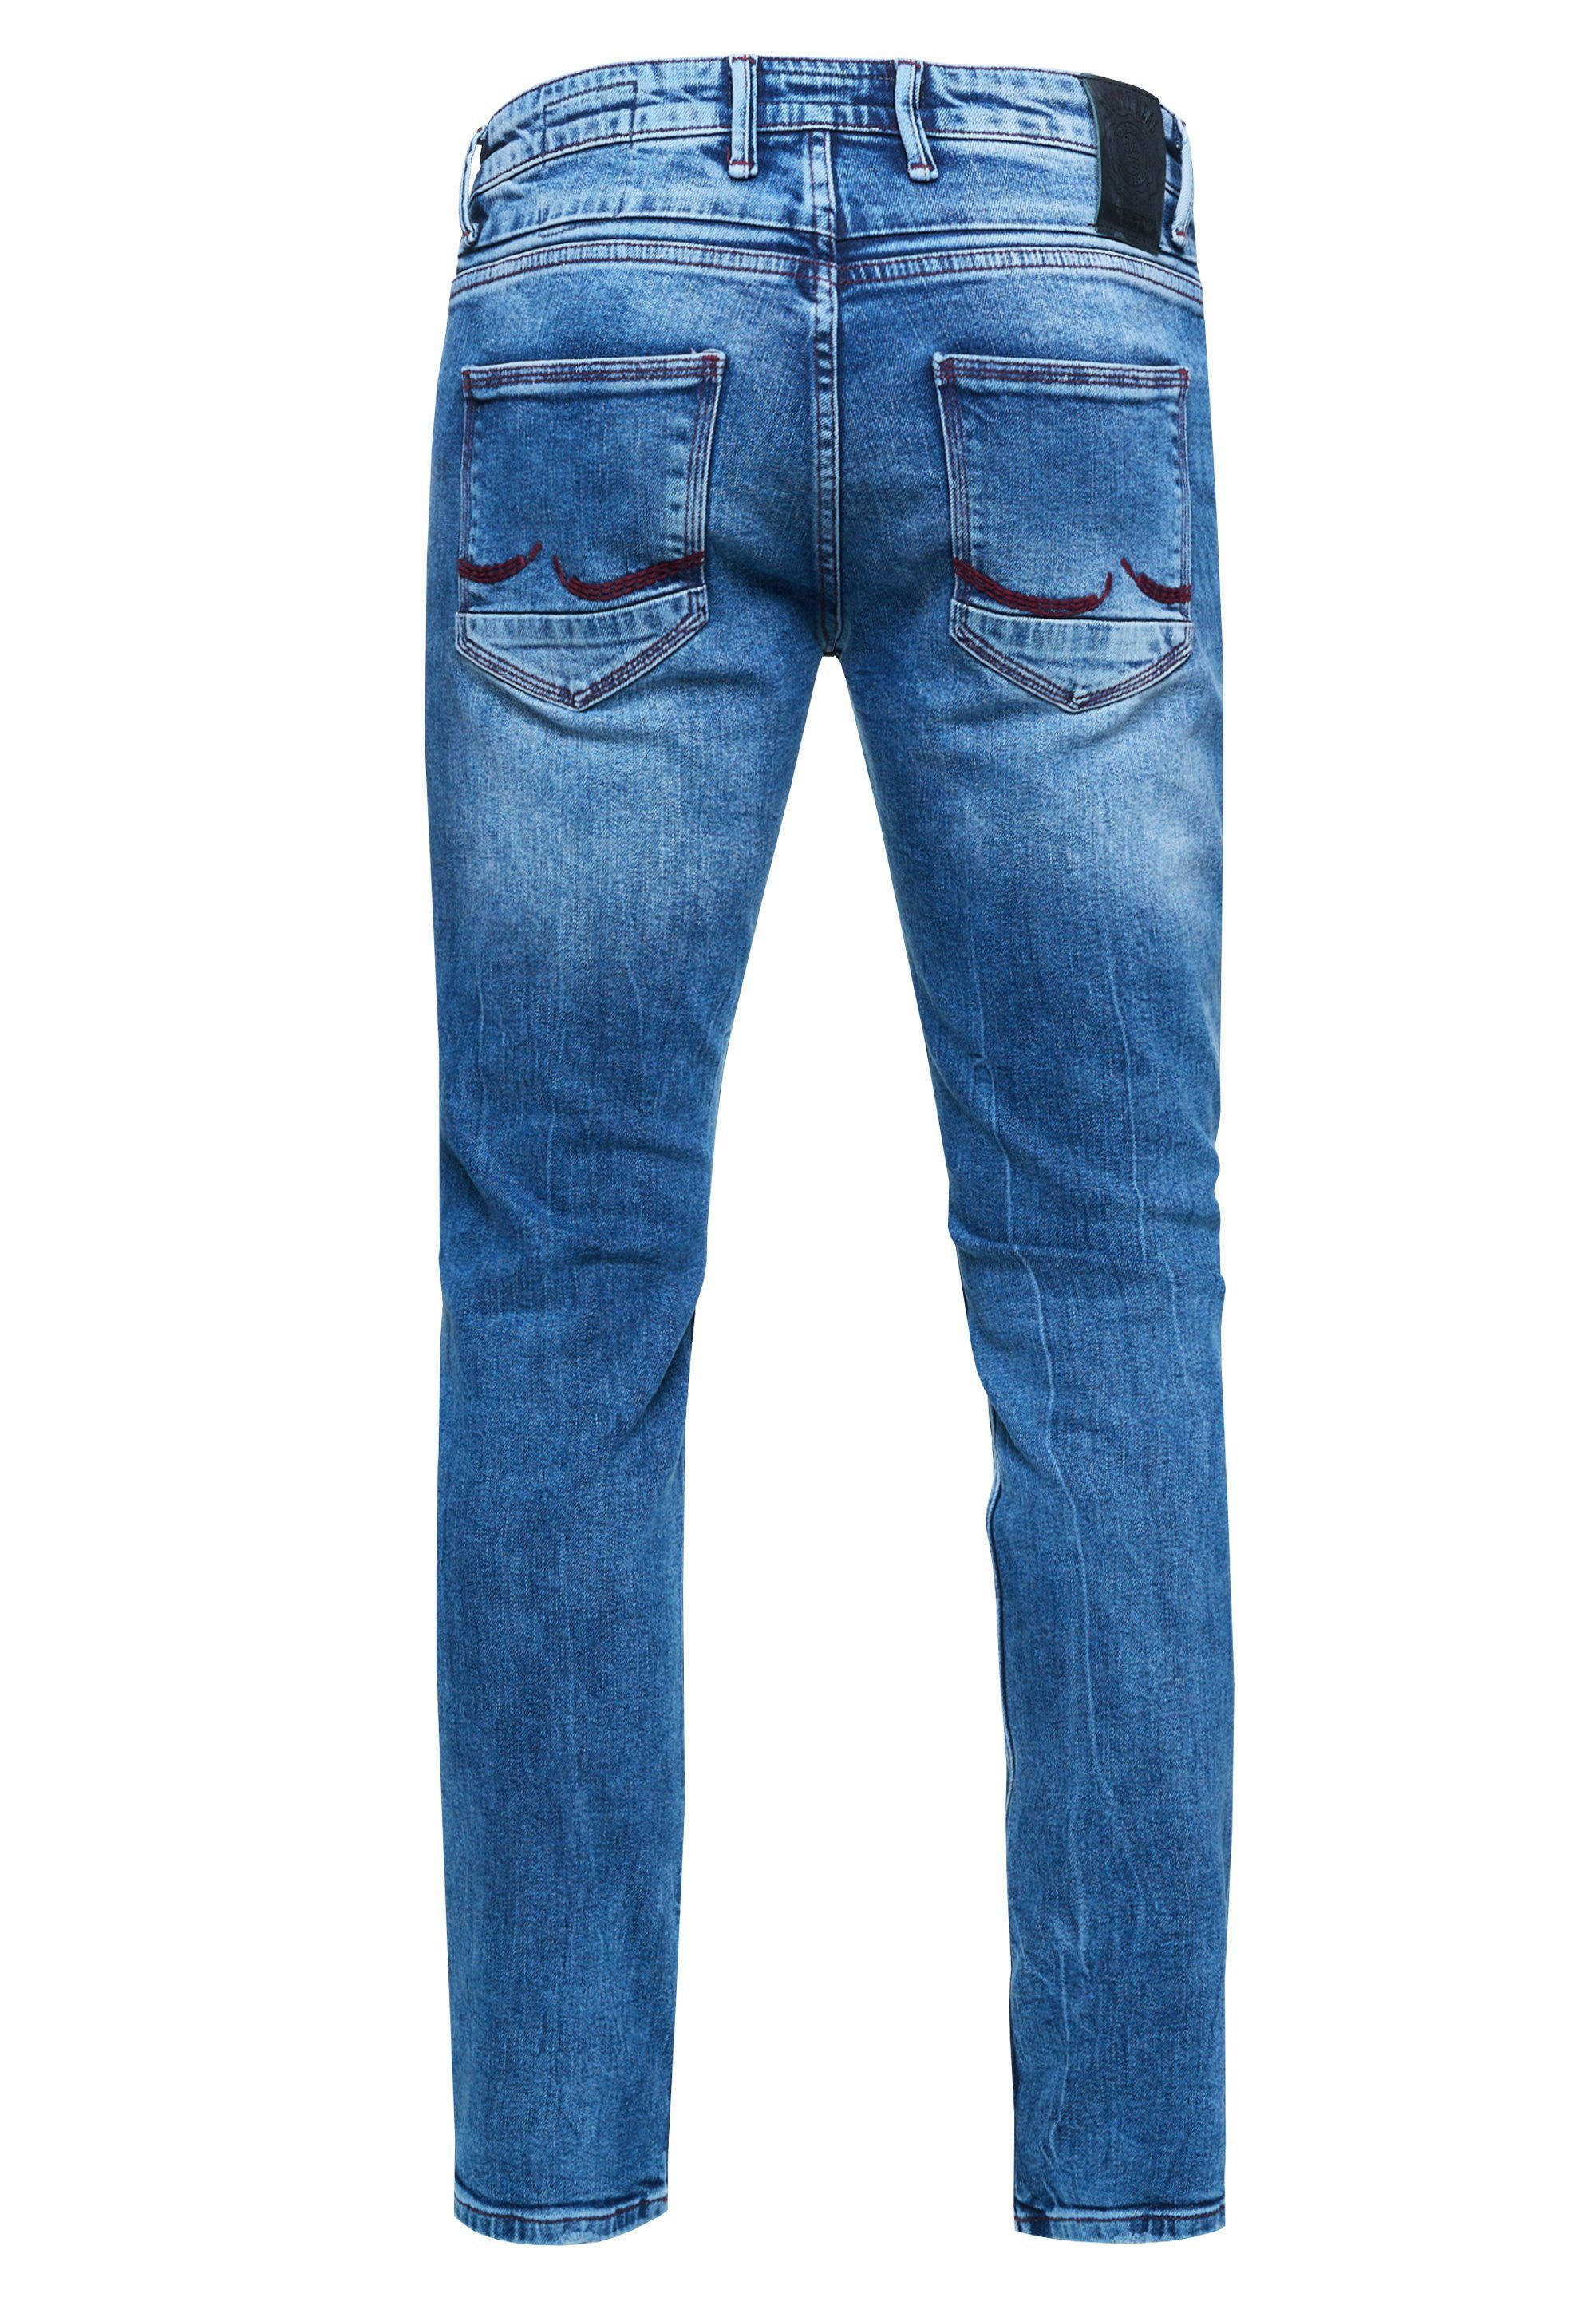 Rusty Neal Straight-Jeans TORI mit dezenter Waschung hellblau